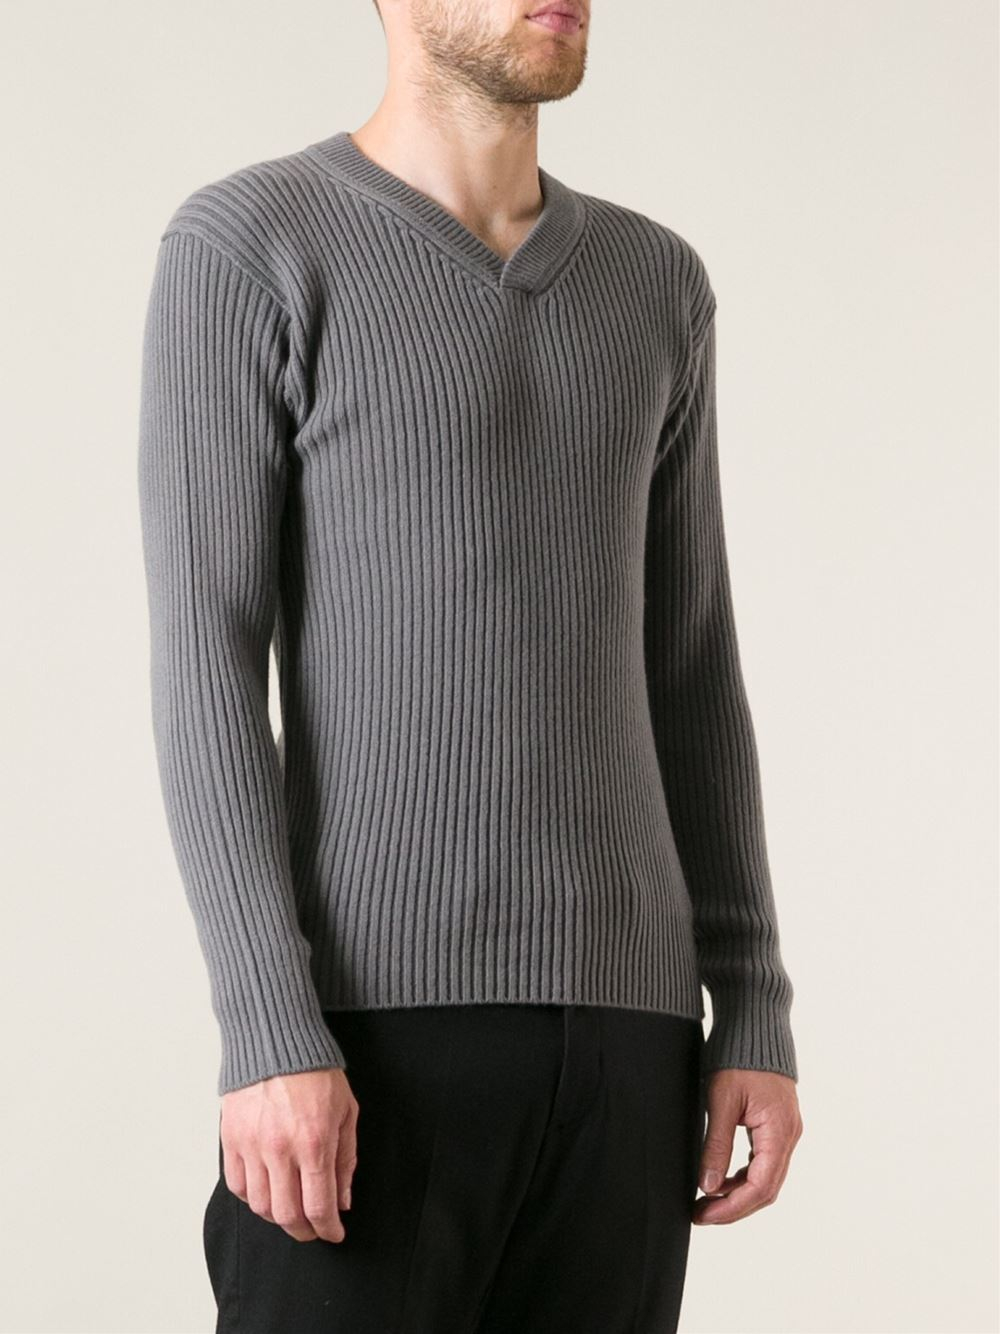 Lyst - Dolce & Gabbana Ribbed V-Neck Sweater in Gray for Men